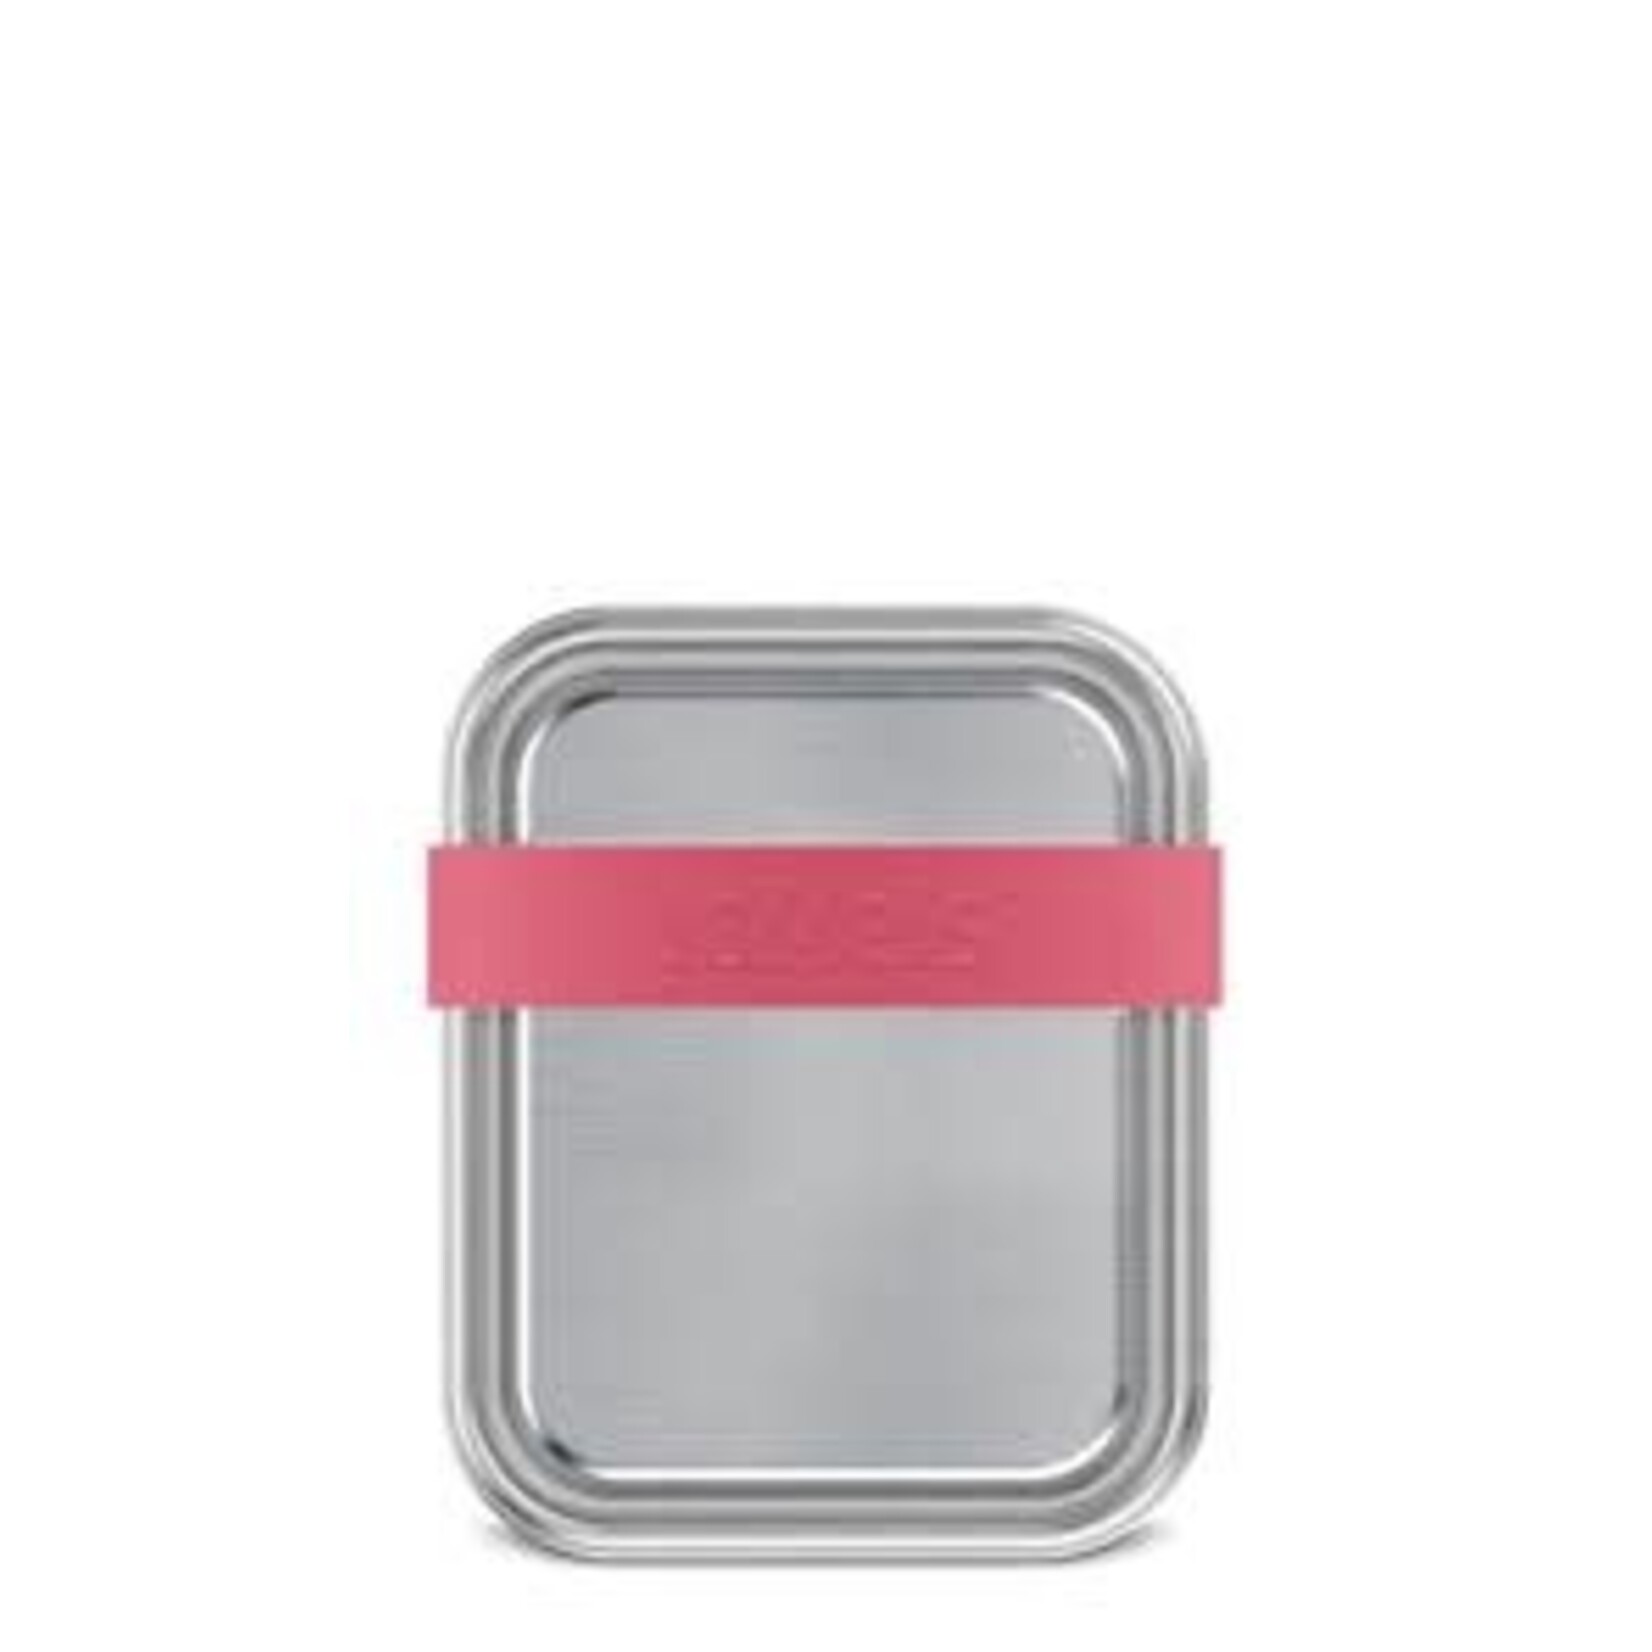 Diverse Merken rvs Lunchbox Boddels smacht 800 ml lunchtrommel rvs Raspberry red rvs Boddels B808000001